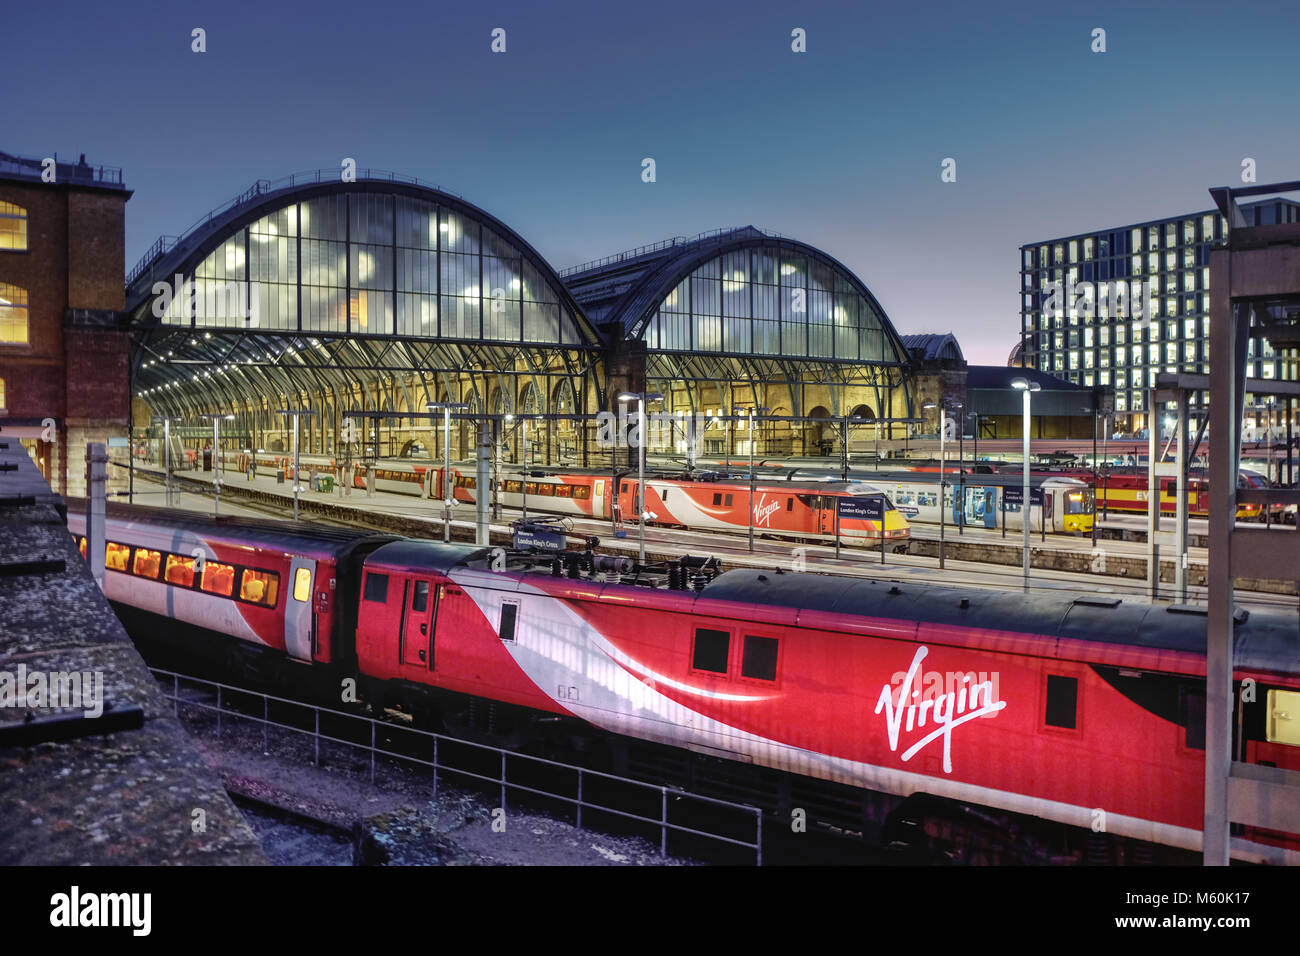 Virgin trains at King's Cross station, London at night Stock Photo